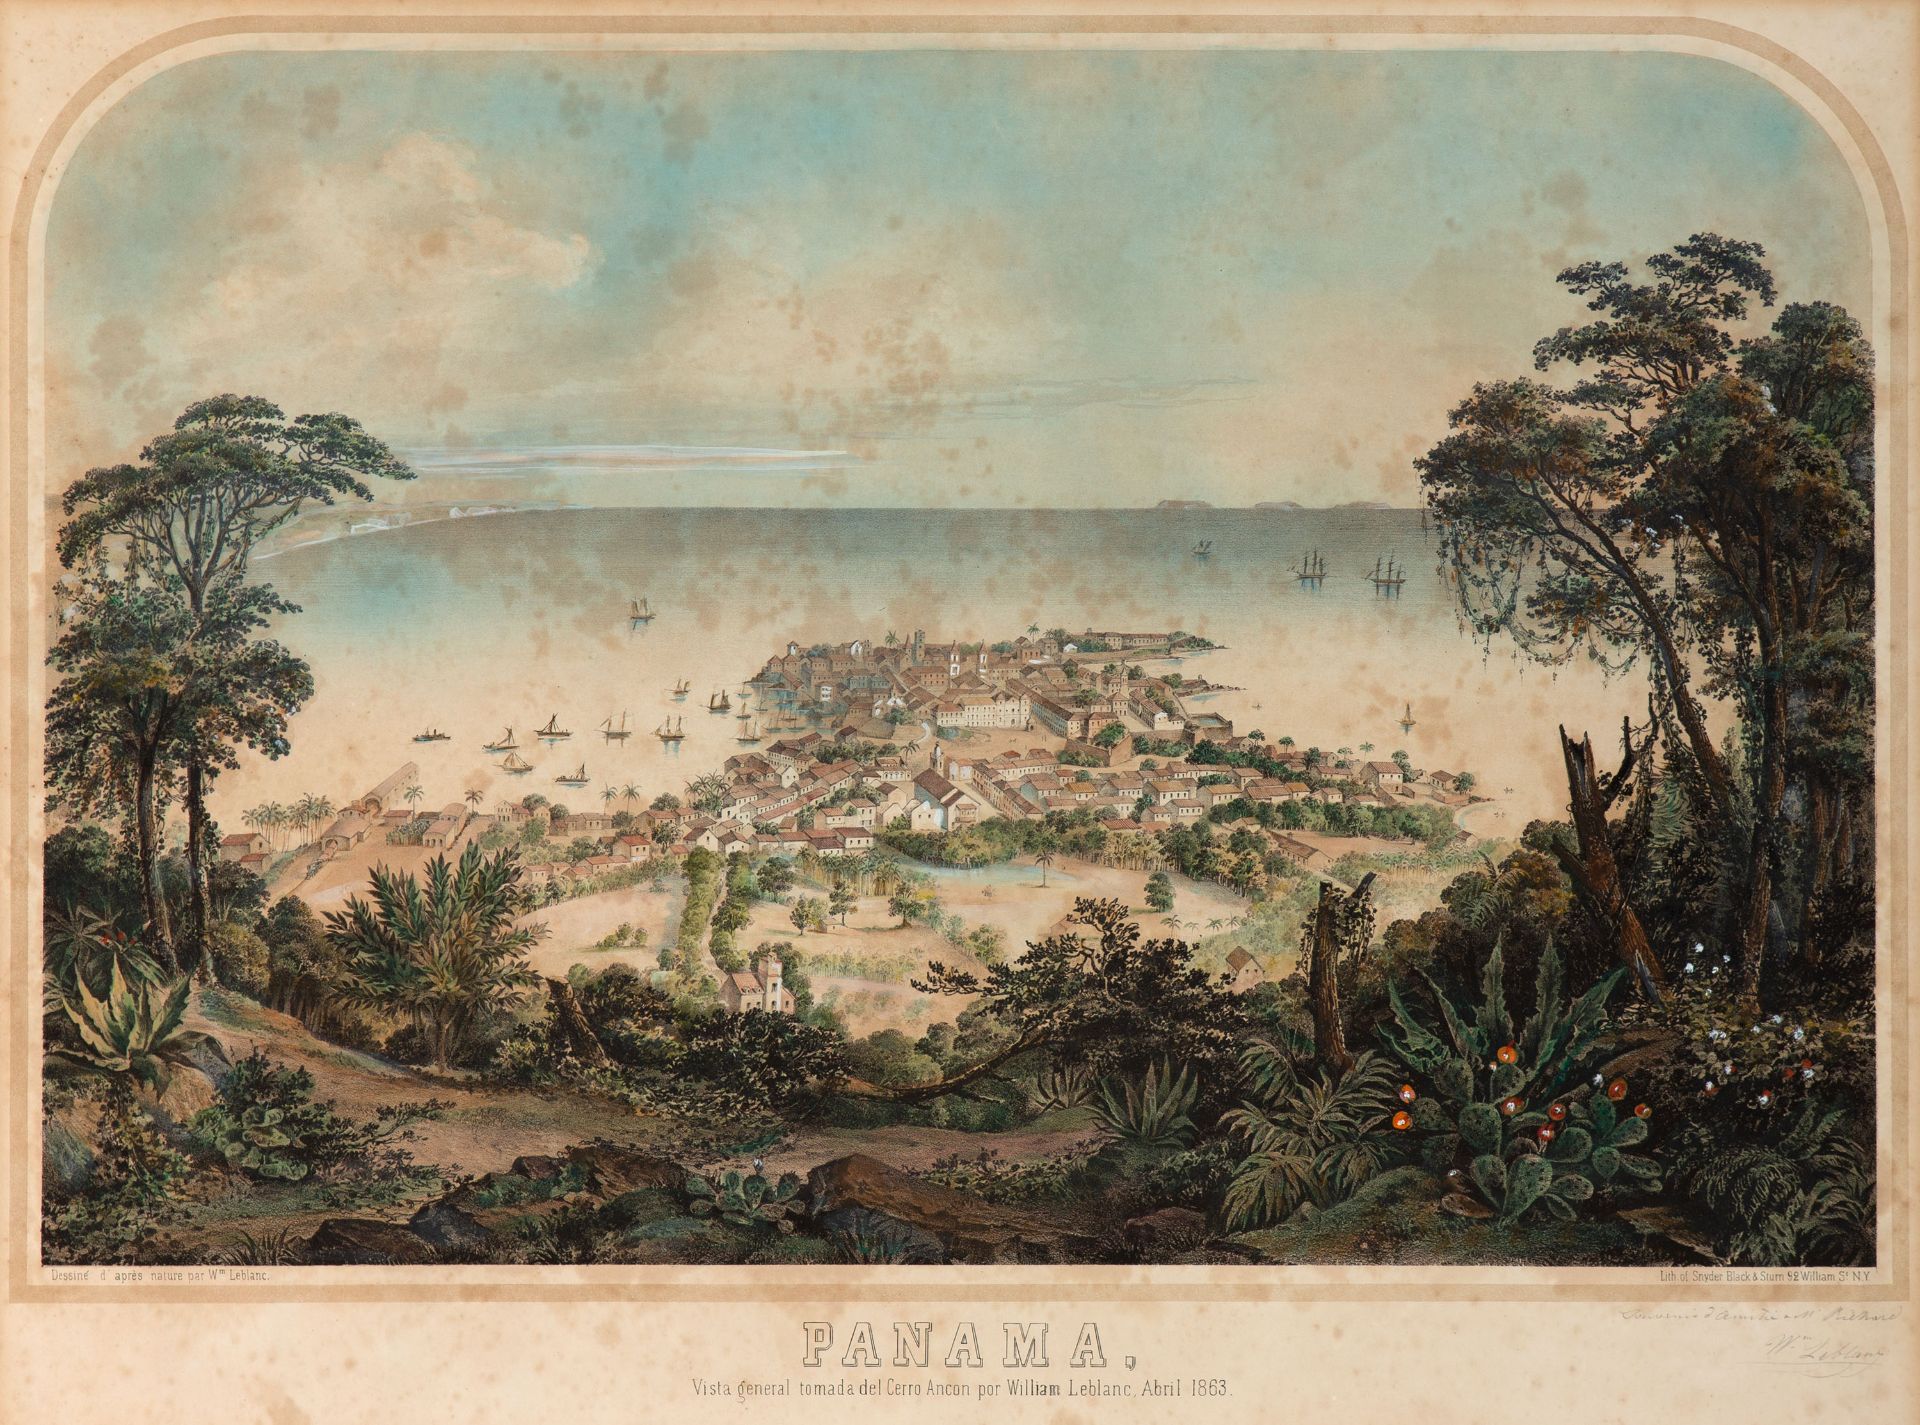 Ansicht von Panama. 1863. Kolorierte Lithographie v. William Leblanc.